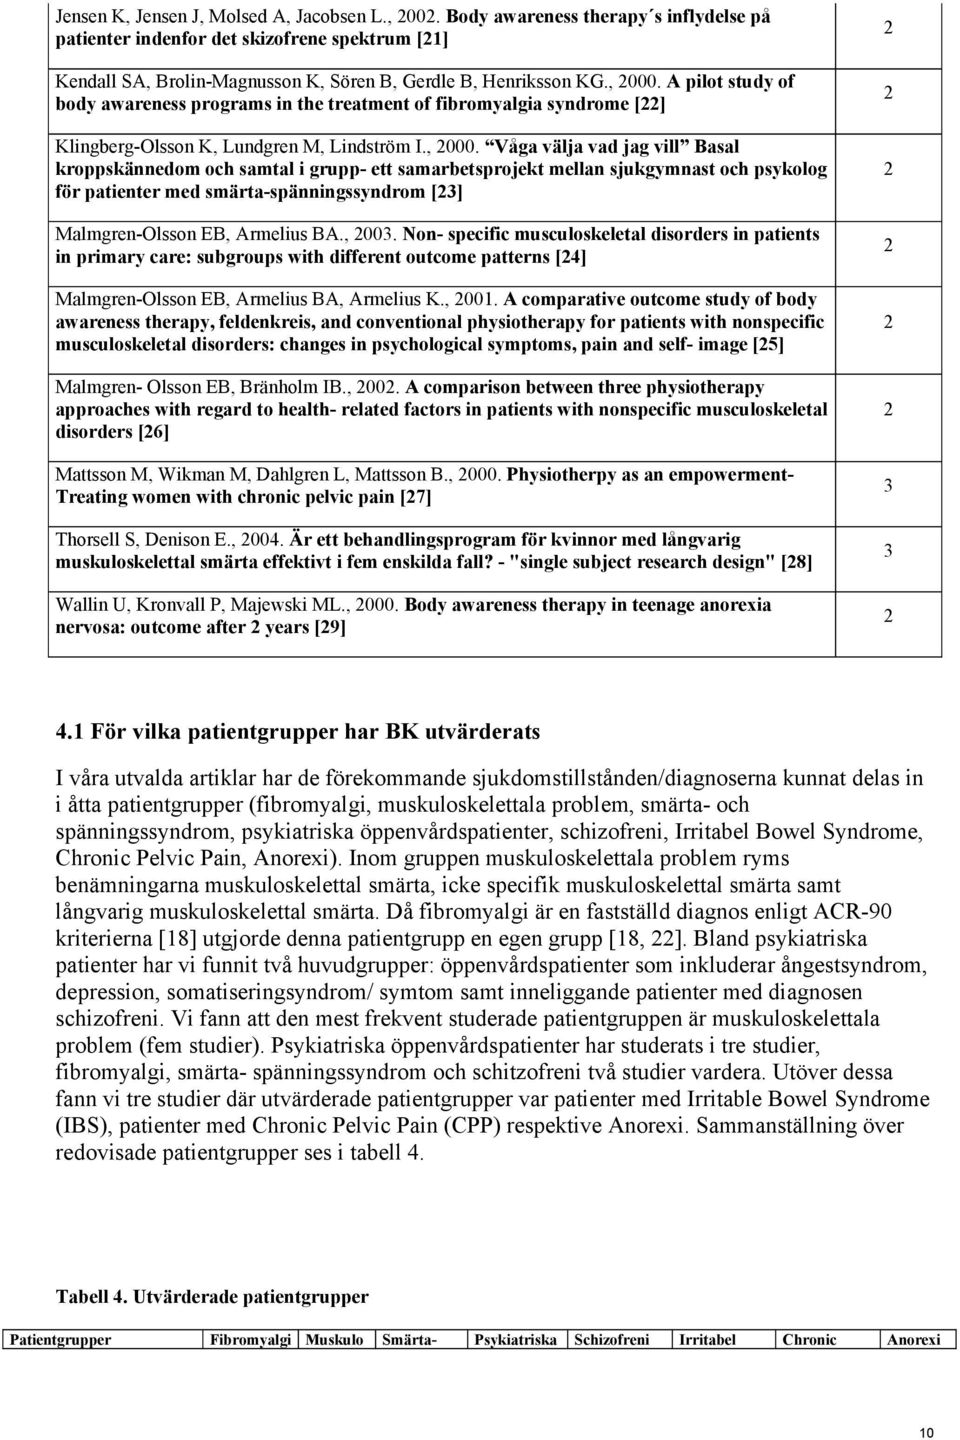 A pilot study of body awareness programs in the treatment of fibromyalgia syndrome [22] Klingberg-Olsson K, Lundgren M, Lindström I., 2000.